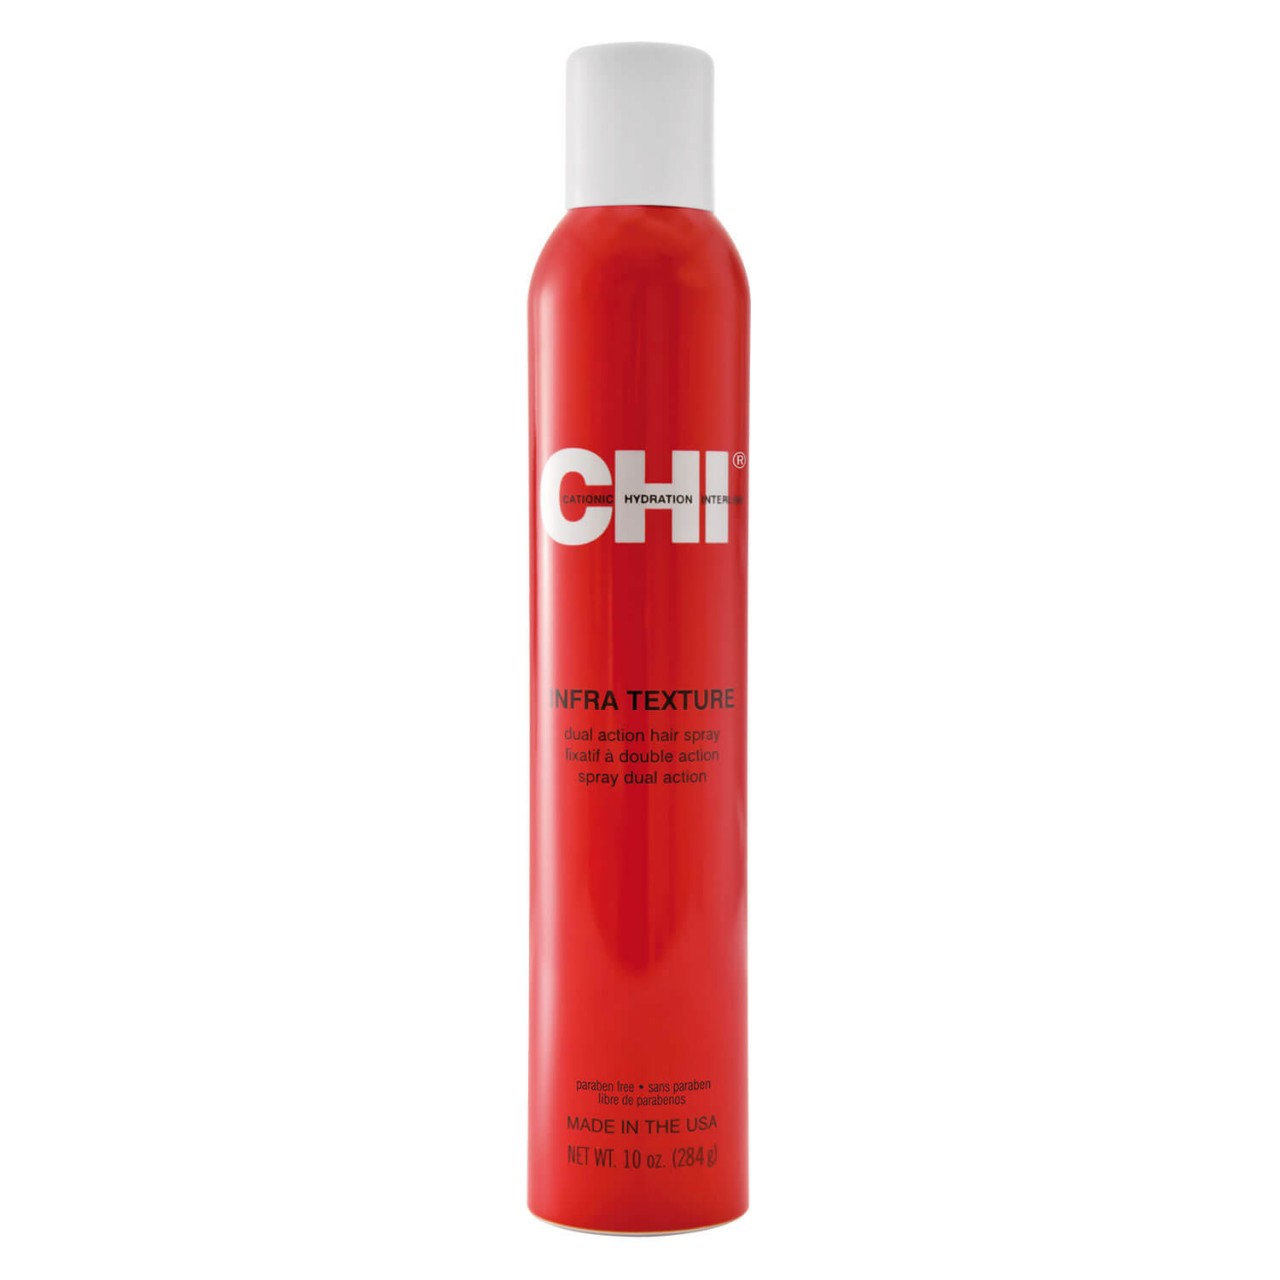 CHI Styling - Infra Texture Dual Action Hair Spray von CHI